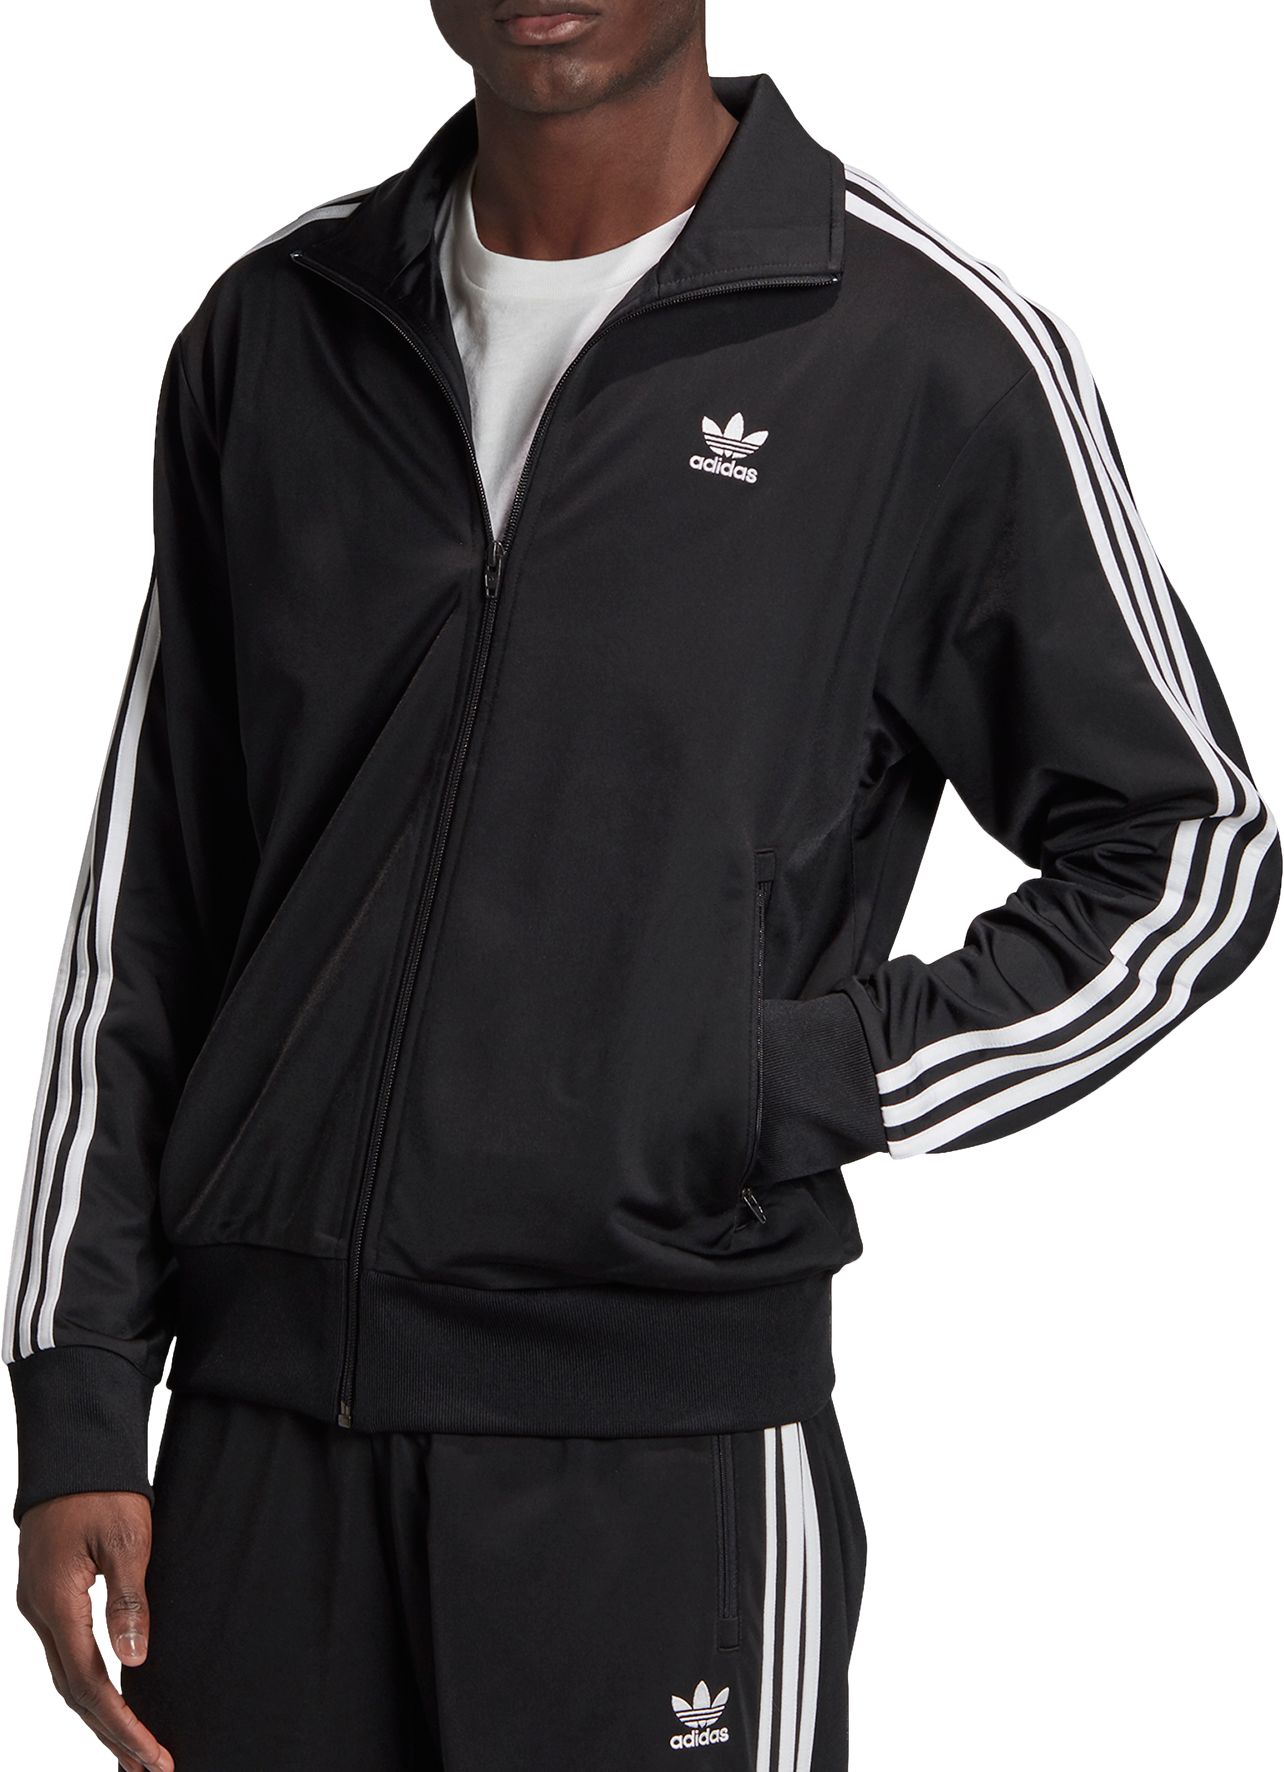 adidas track jacket mens black